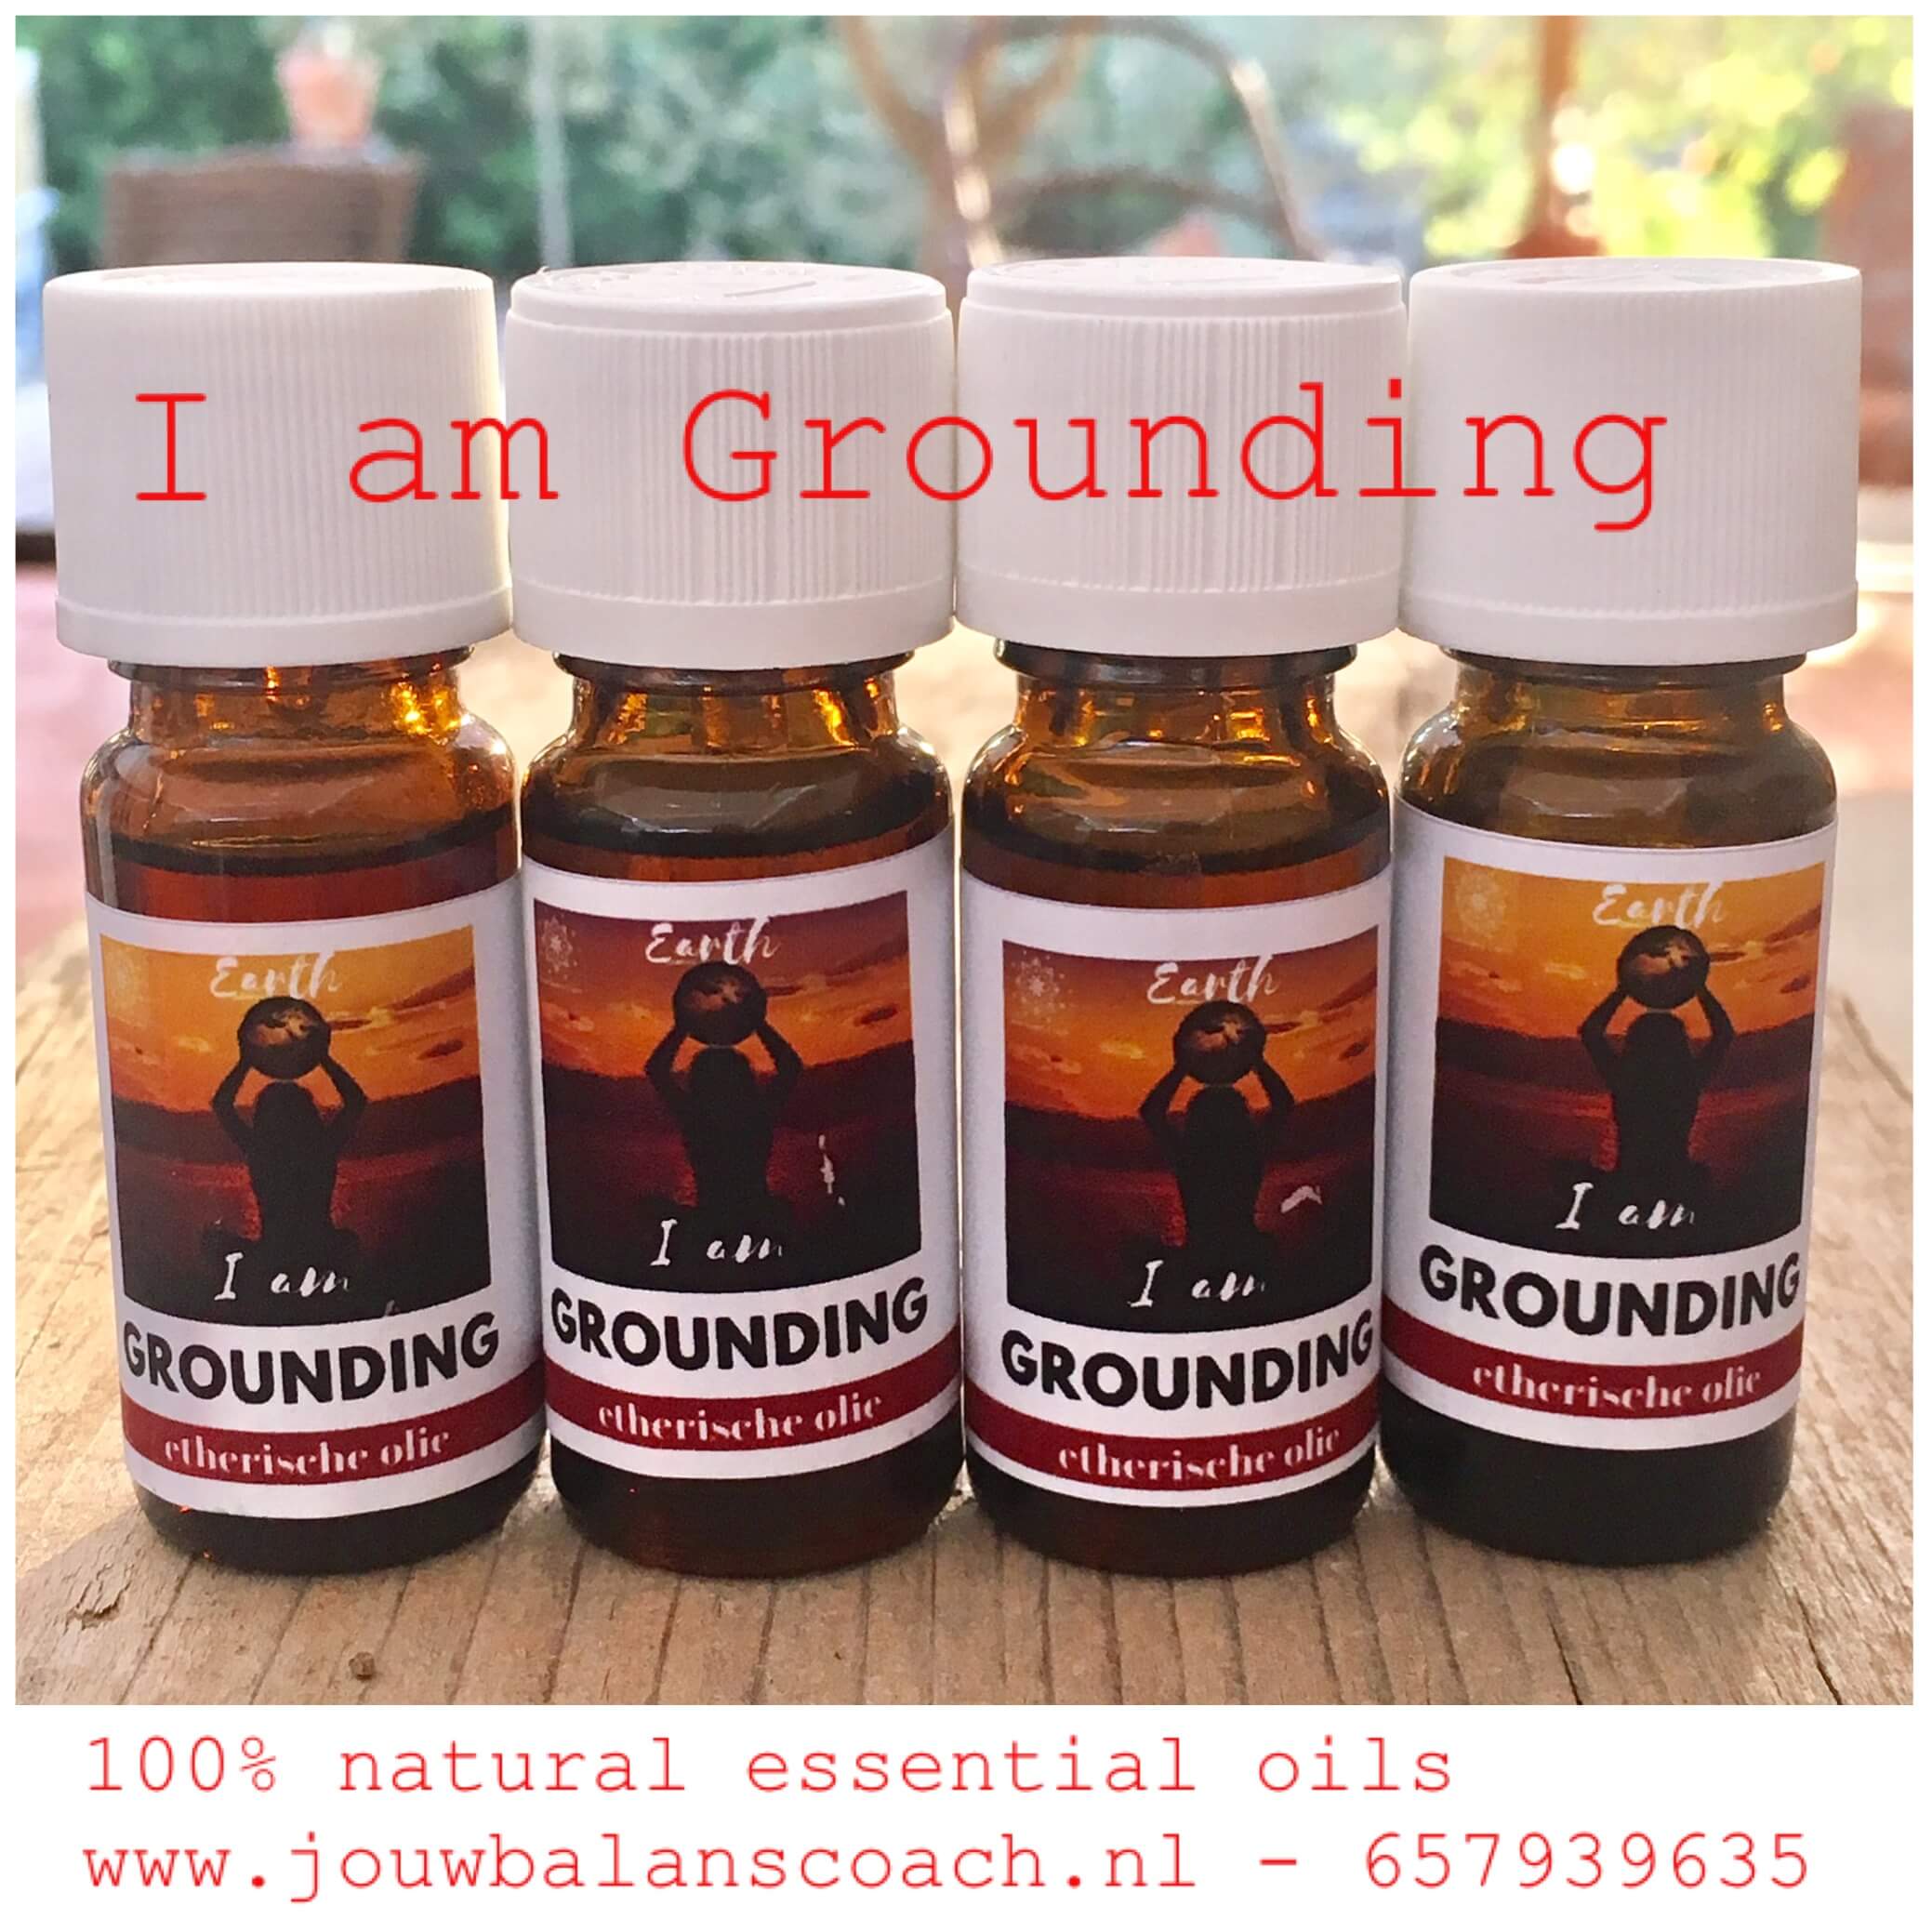 I am gronding - aromatherapy